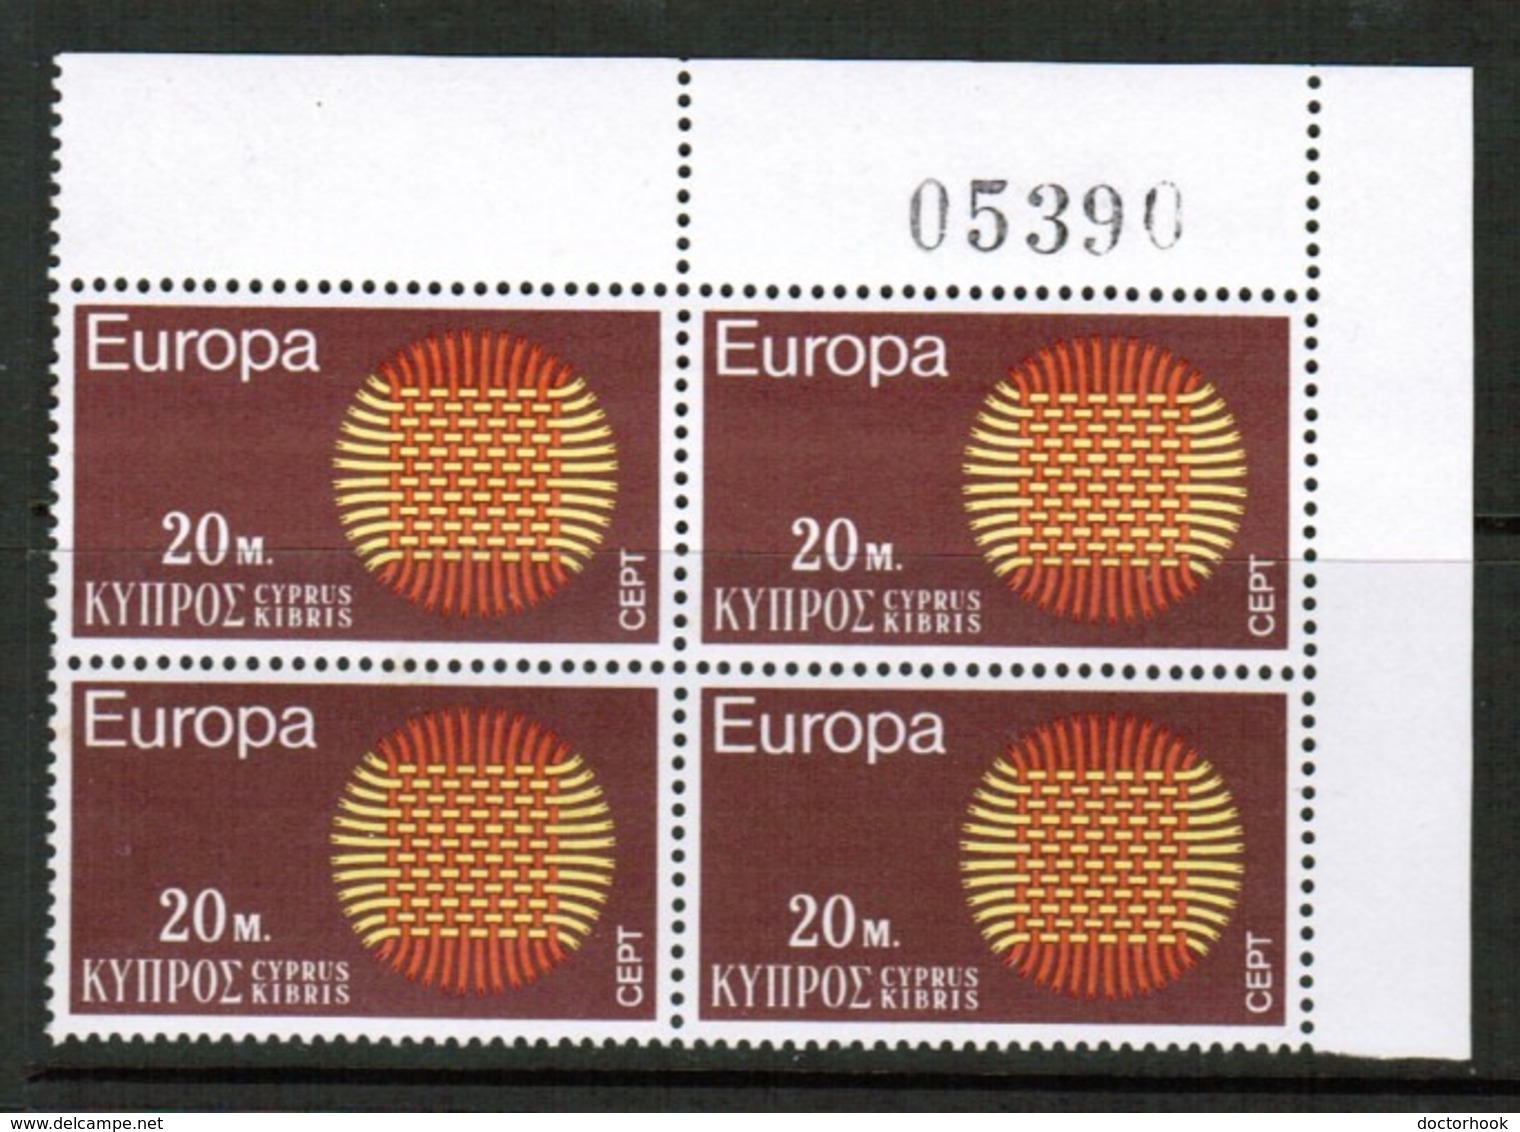 CYPRUS   Scott # 340** 1970 "EUROPA" VF MINT NH CORNER INSCRIPTION BLOCK Of 4 (LG-1188) - 1970